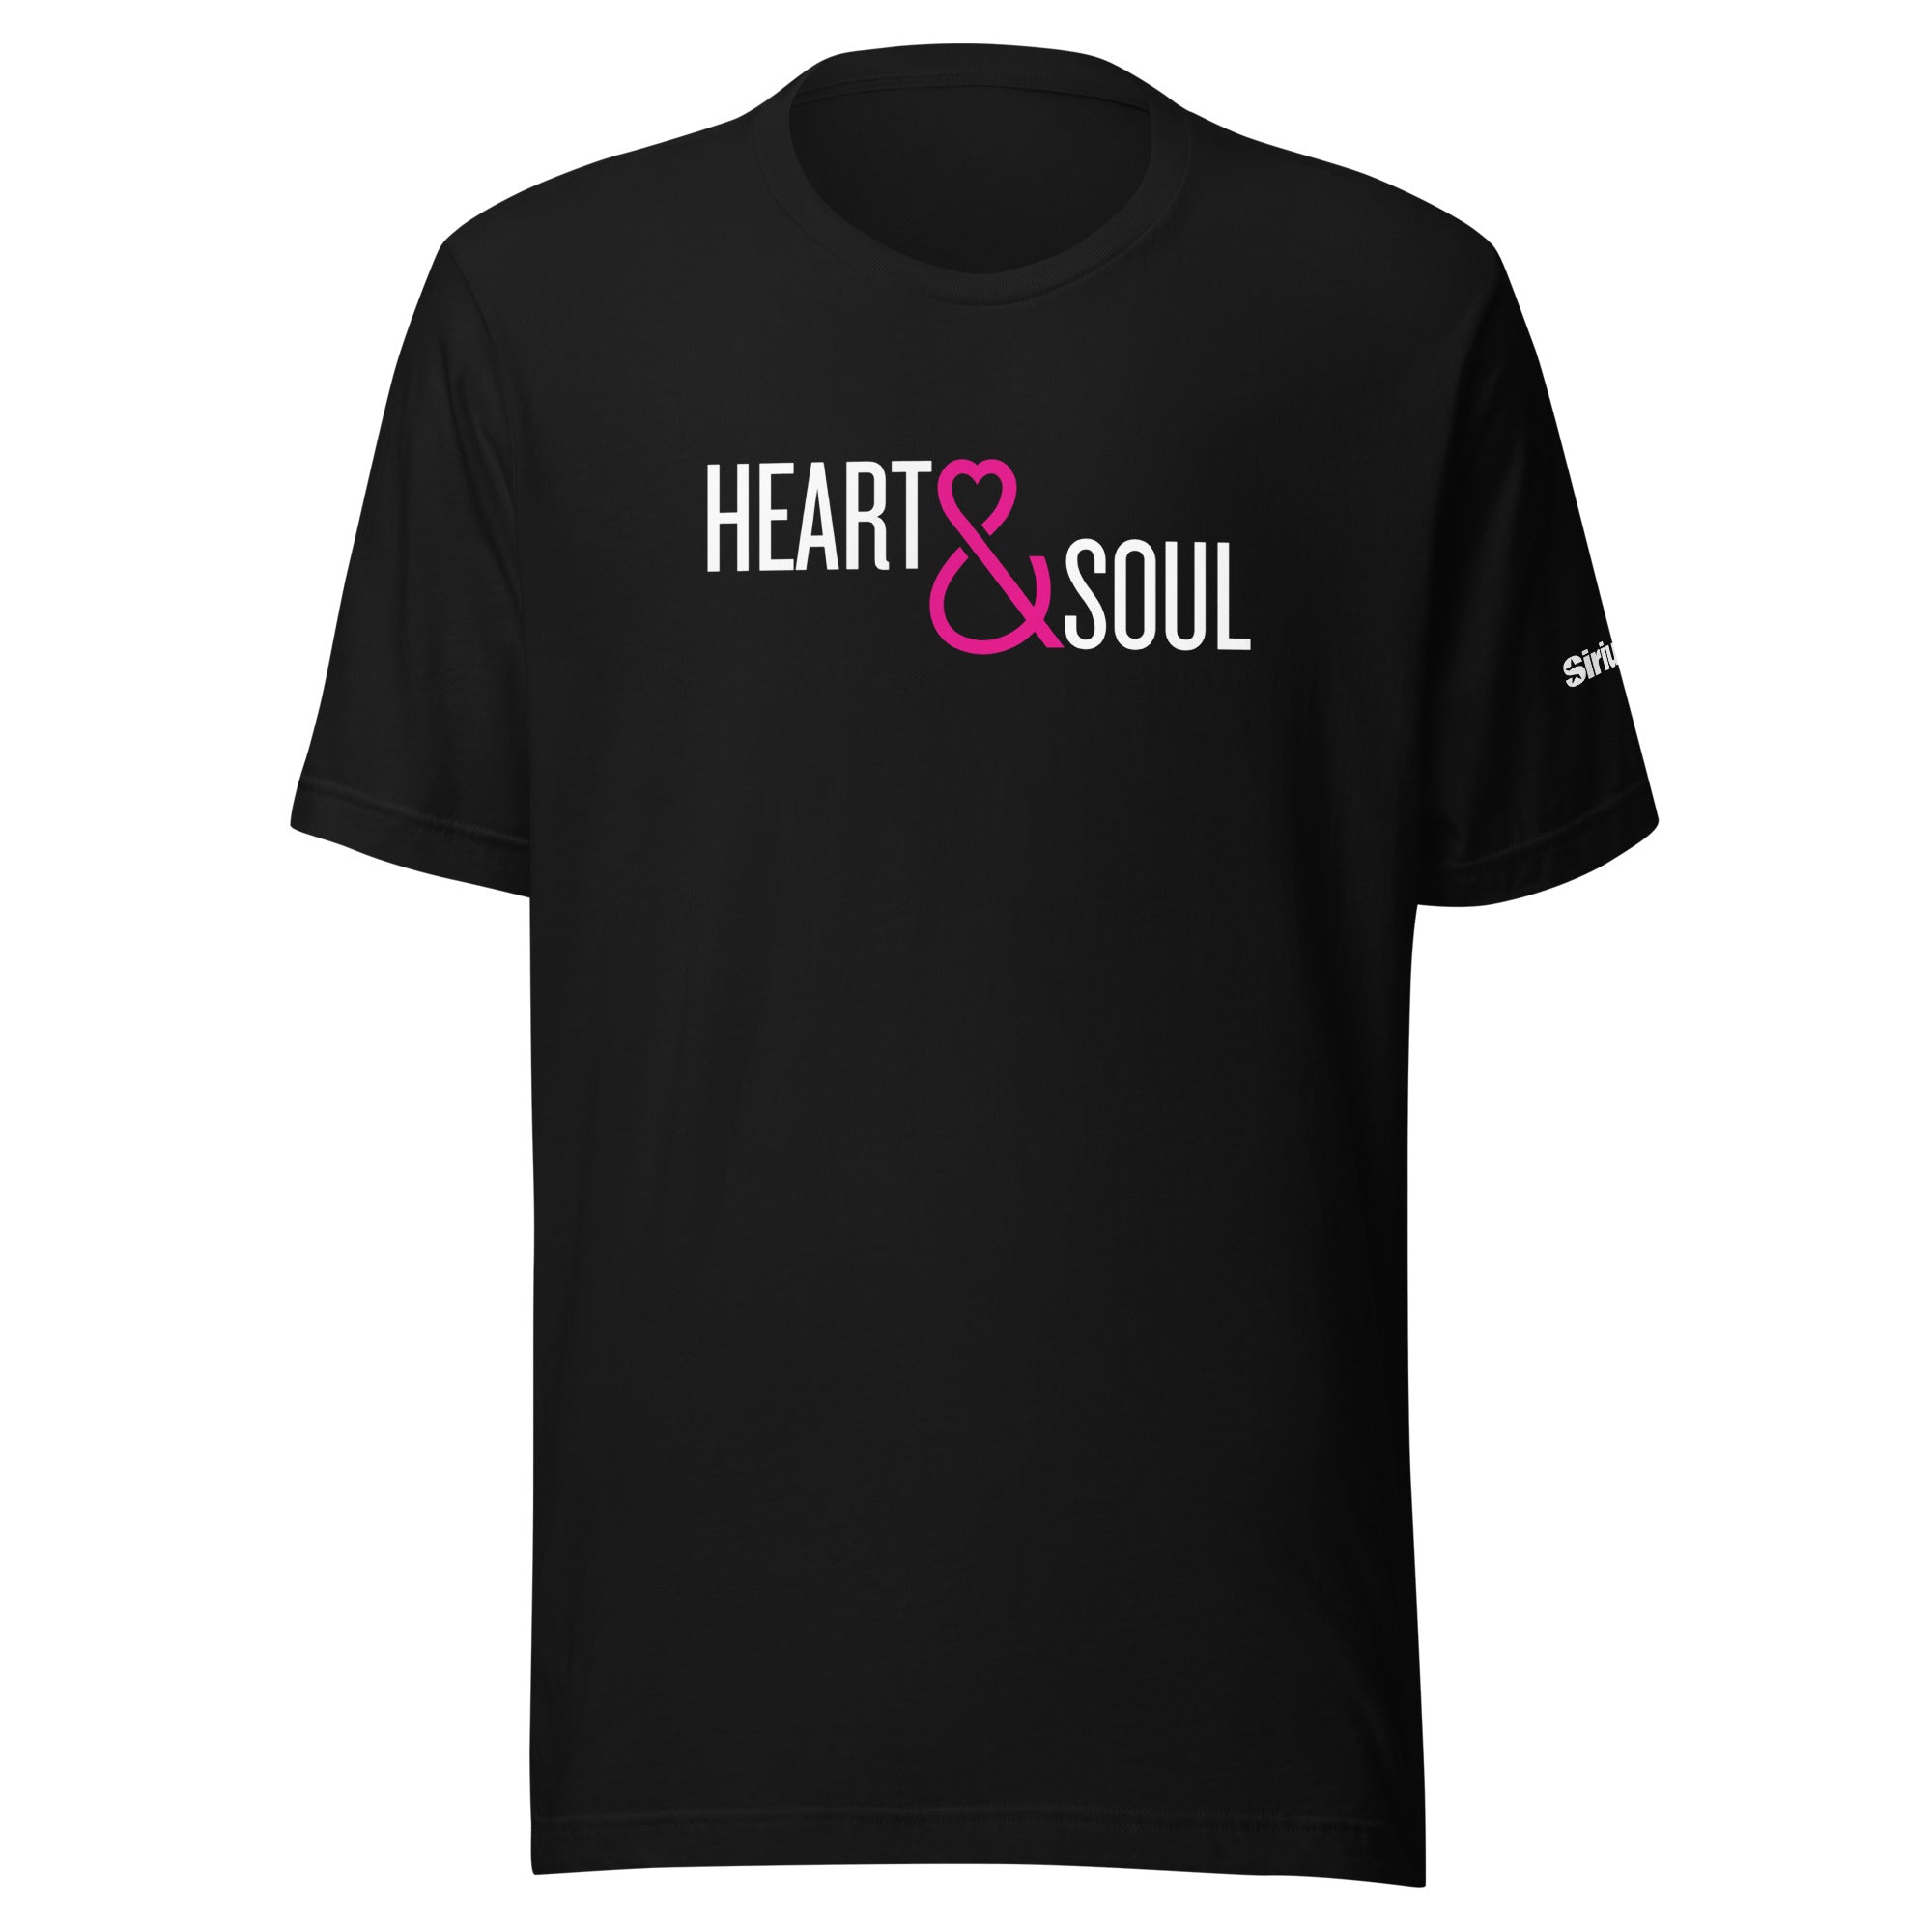 Heart & Soul: T-shirt (Black)